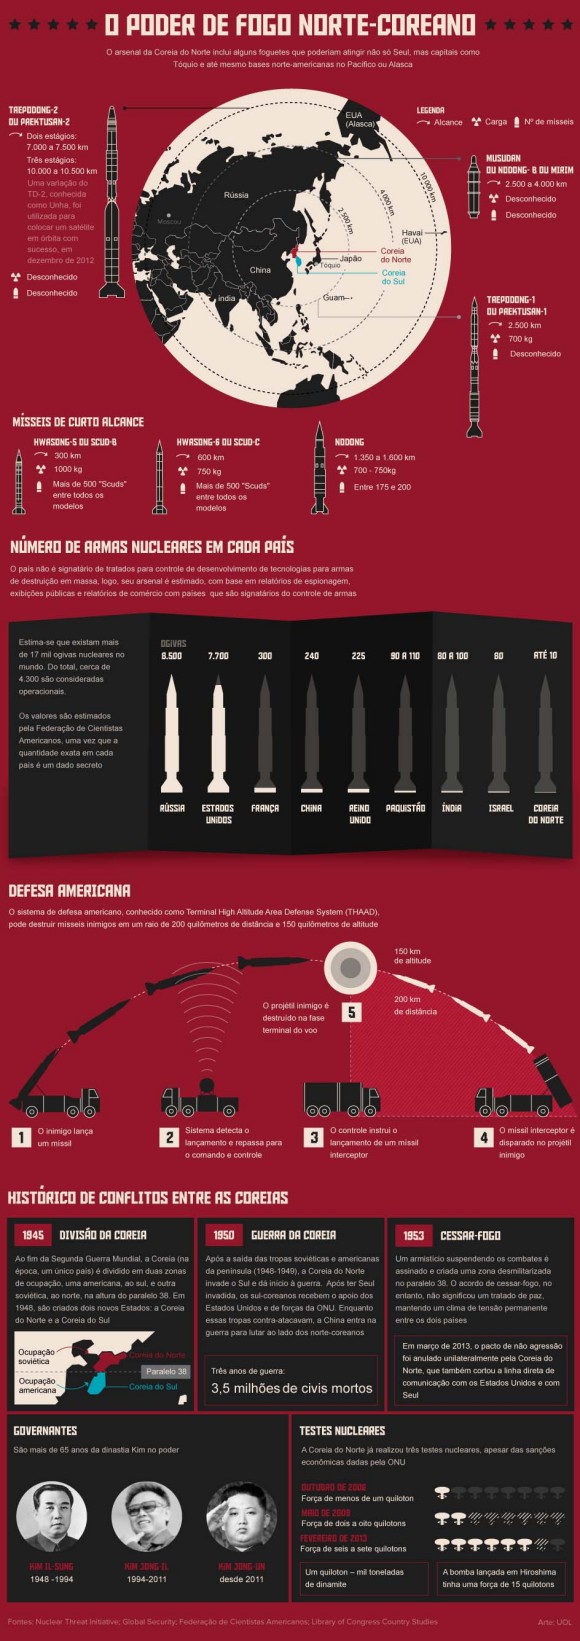 poder-de-fogo-norte-coreano - infográfico Uol